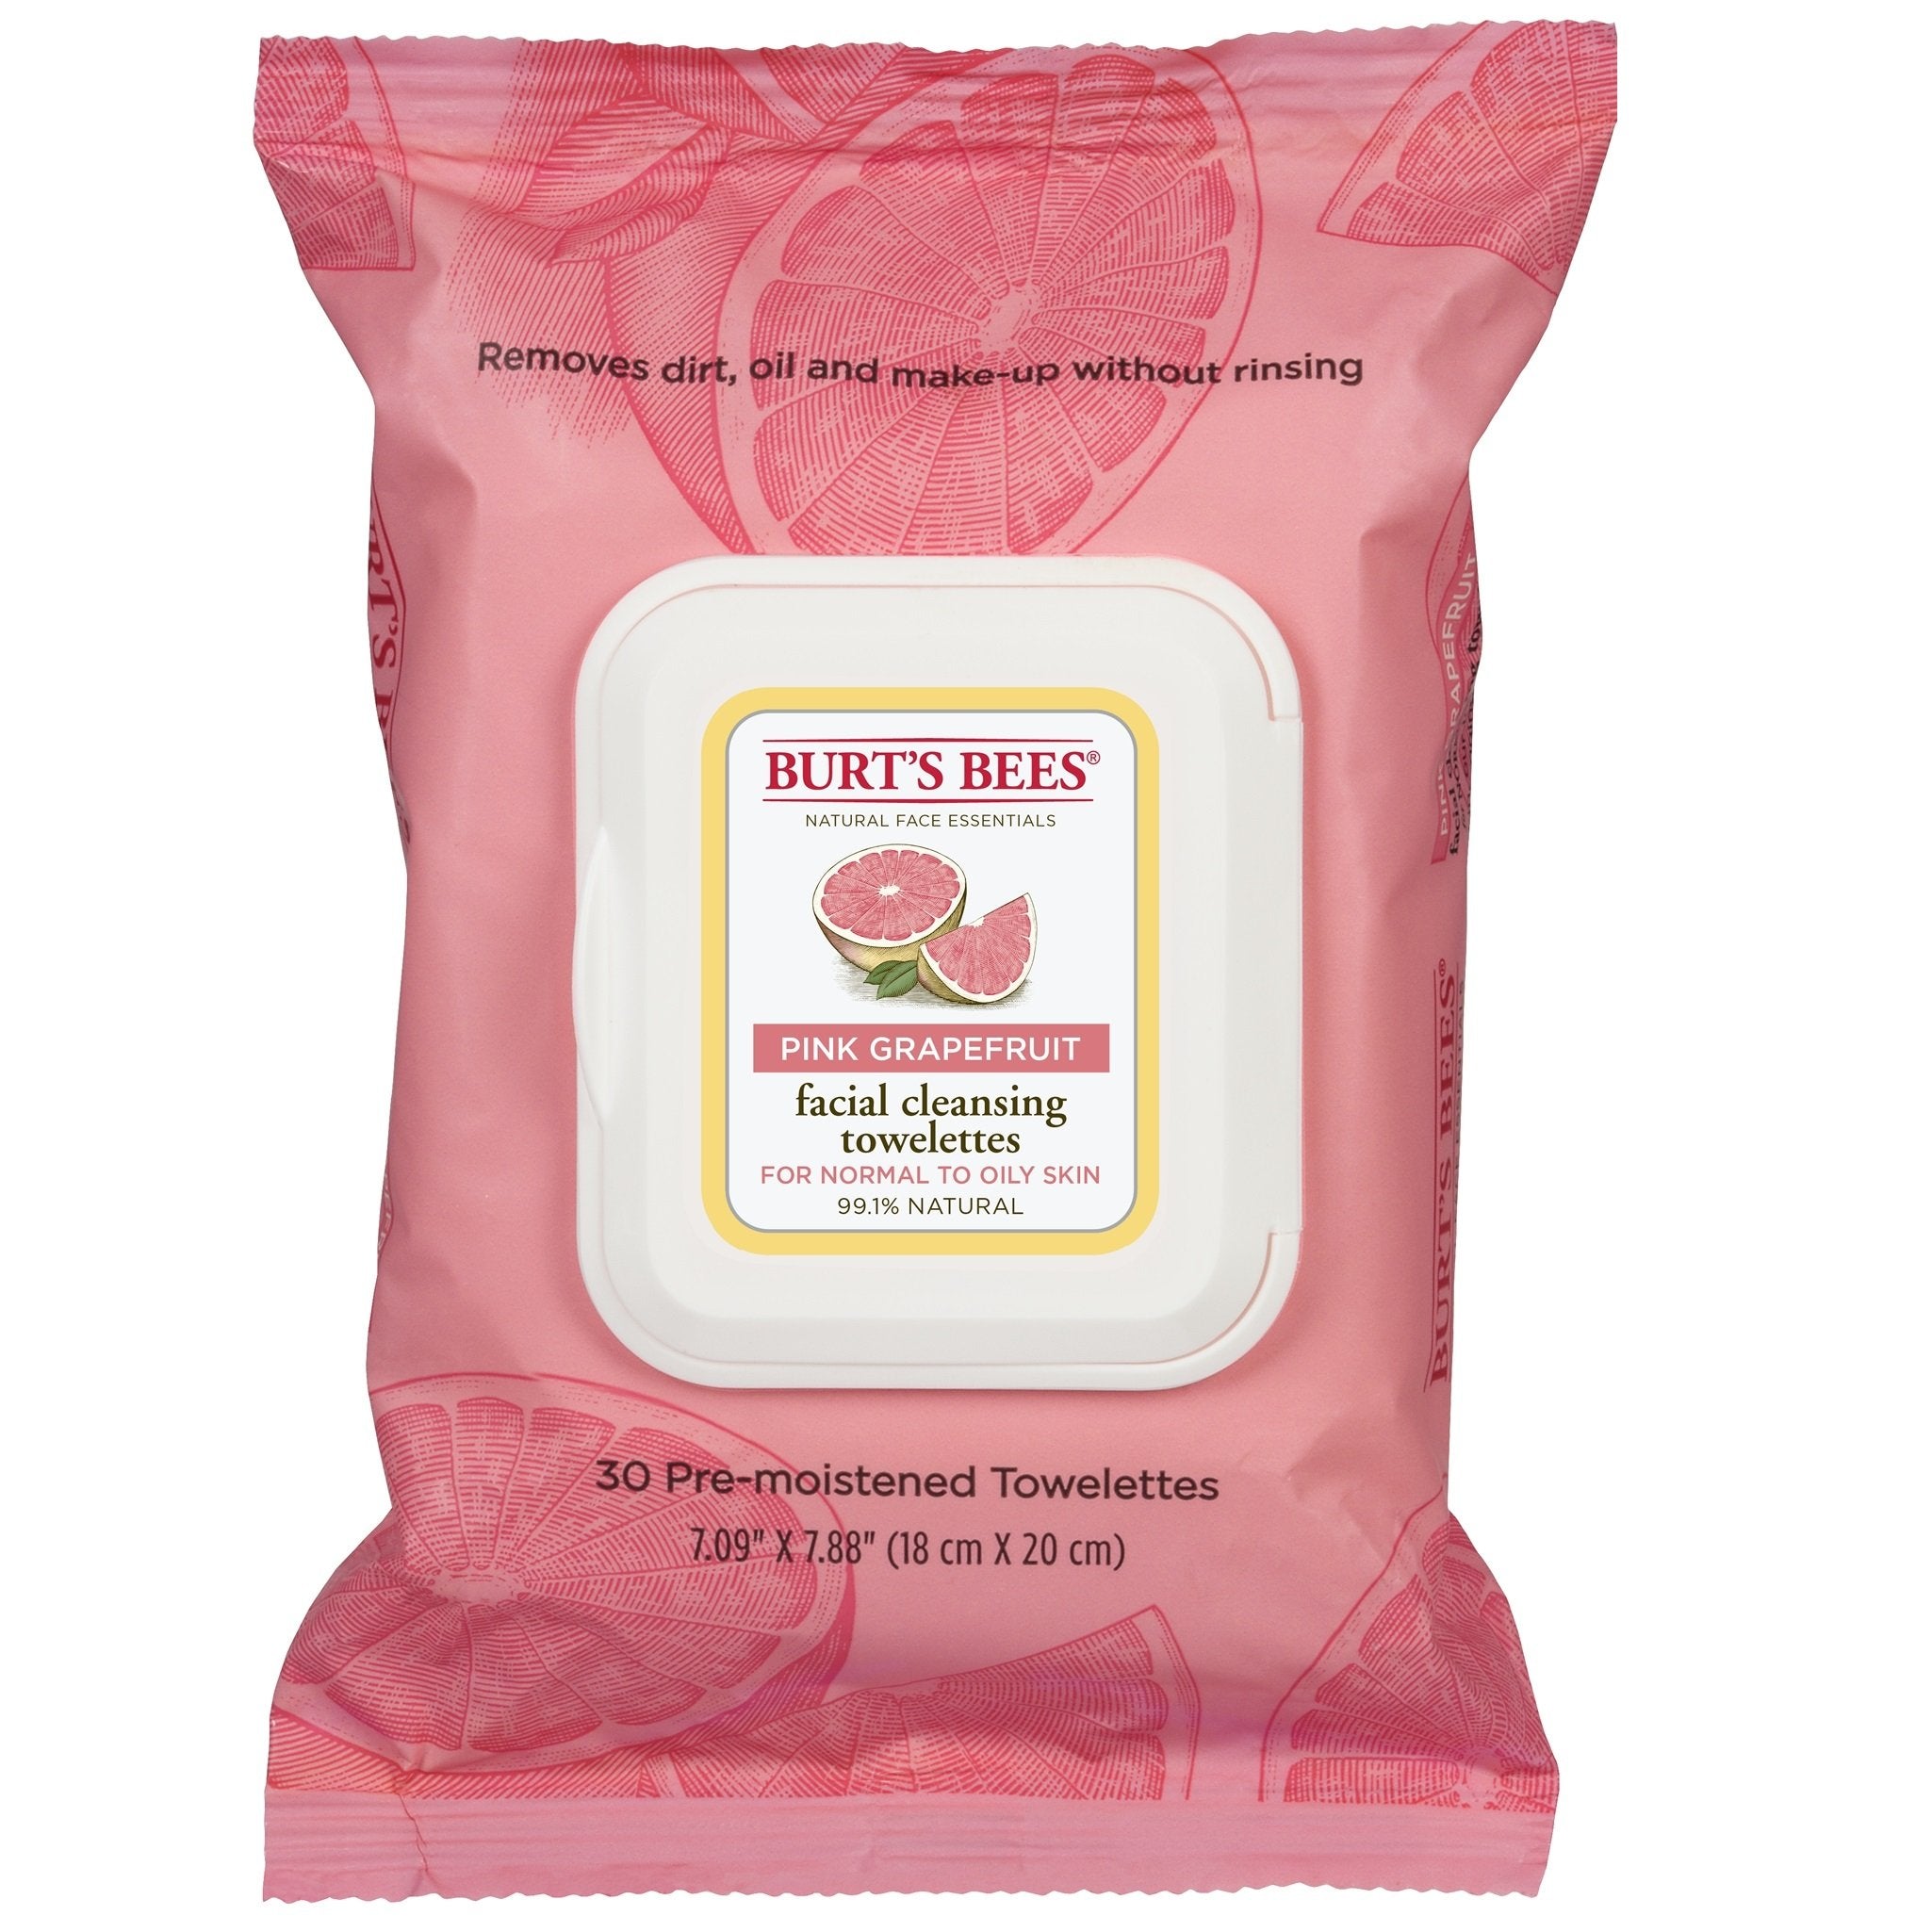 BURT'S BEES Facial Cleansing Towelettes - Pink Grapefruit